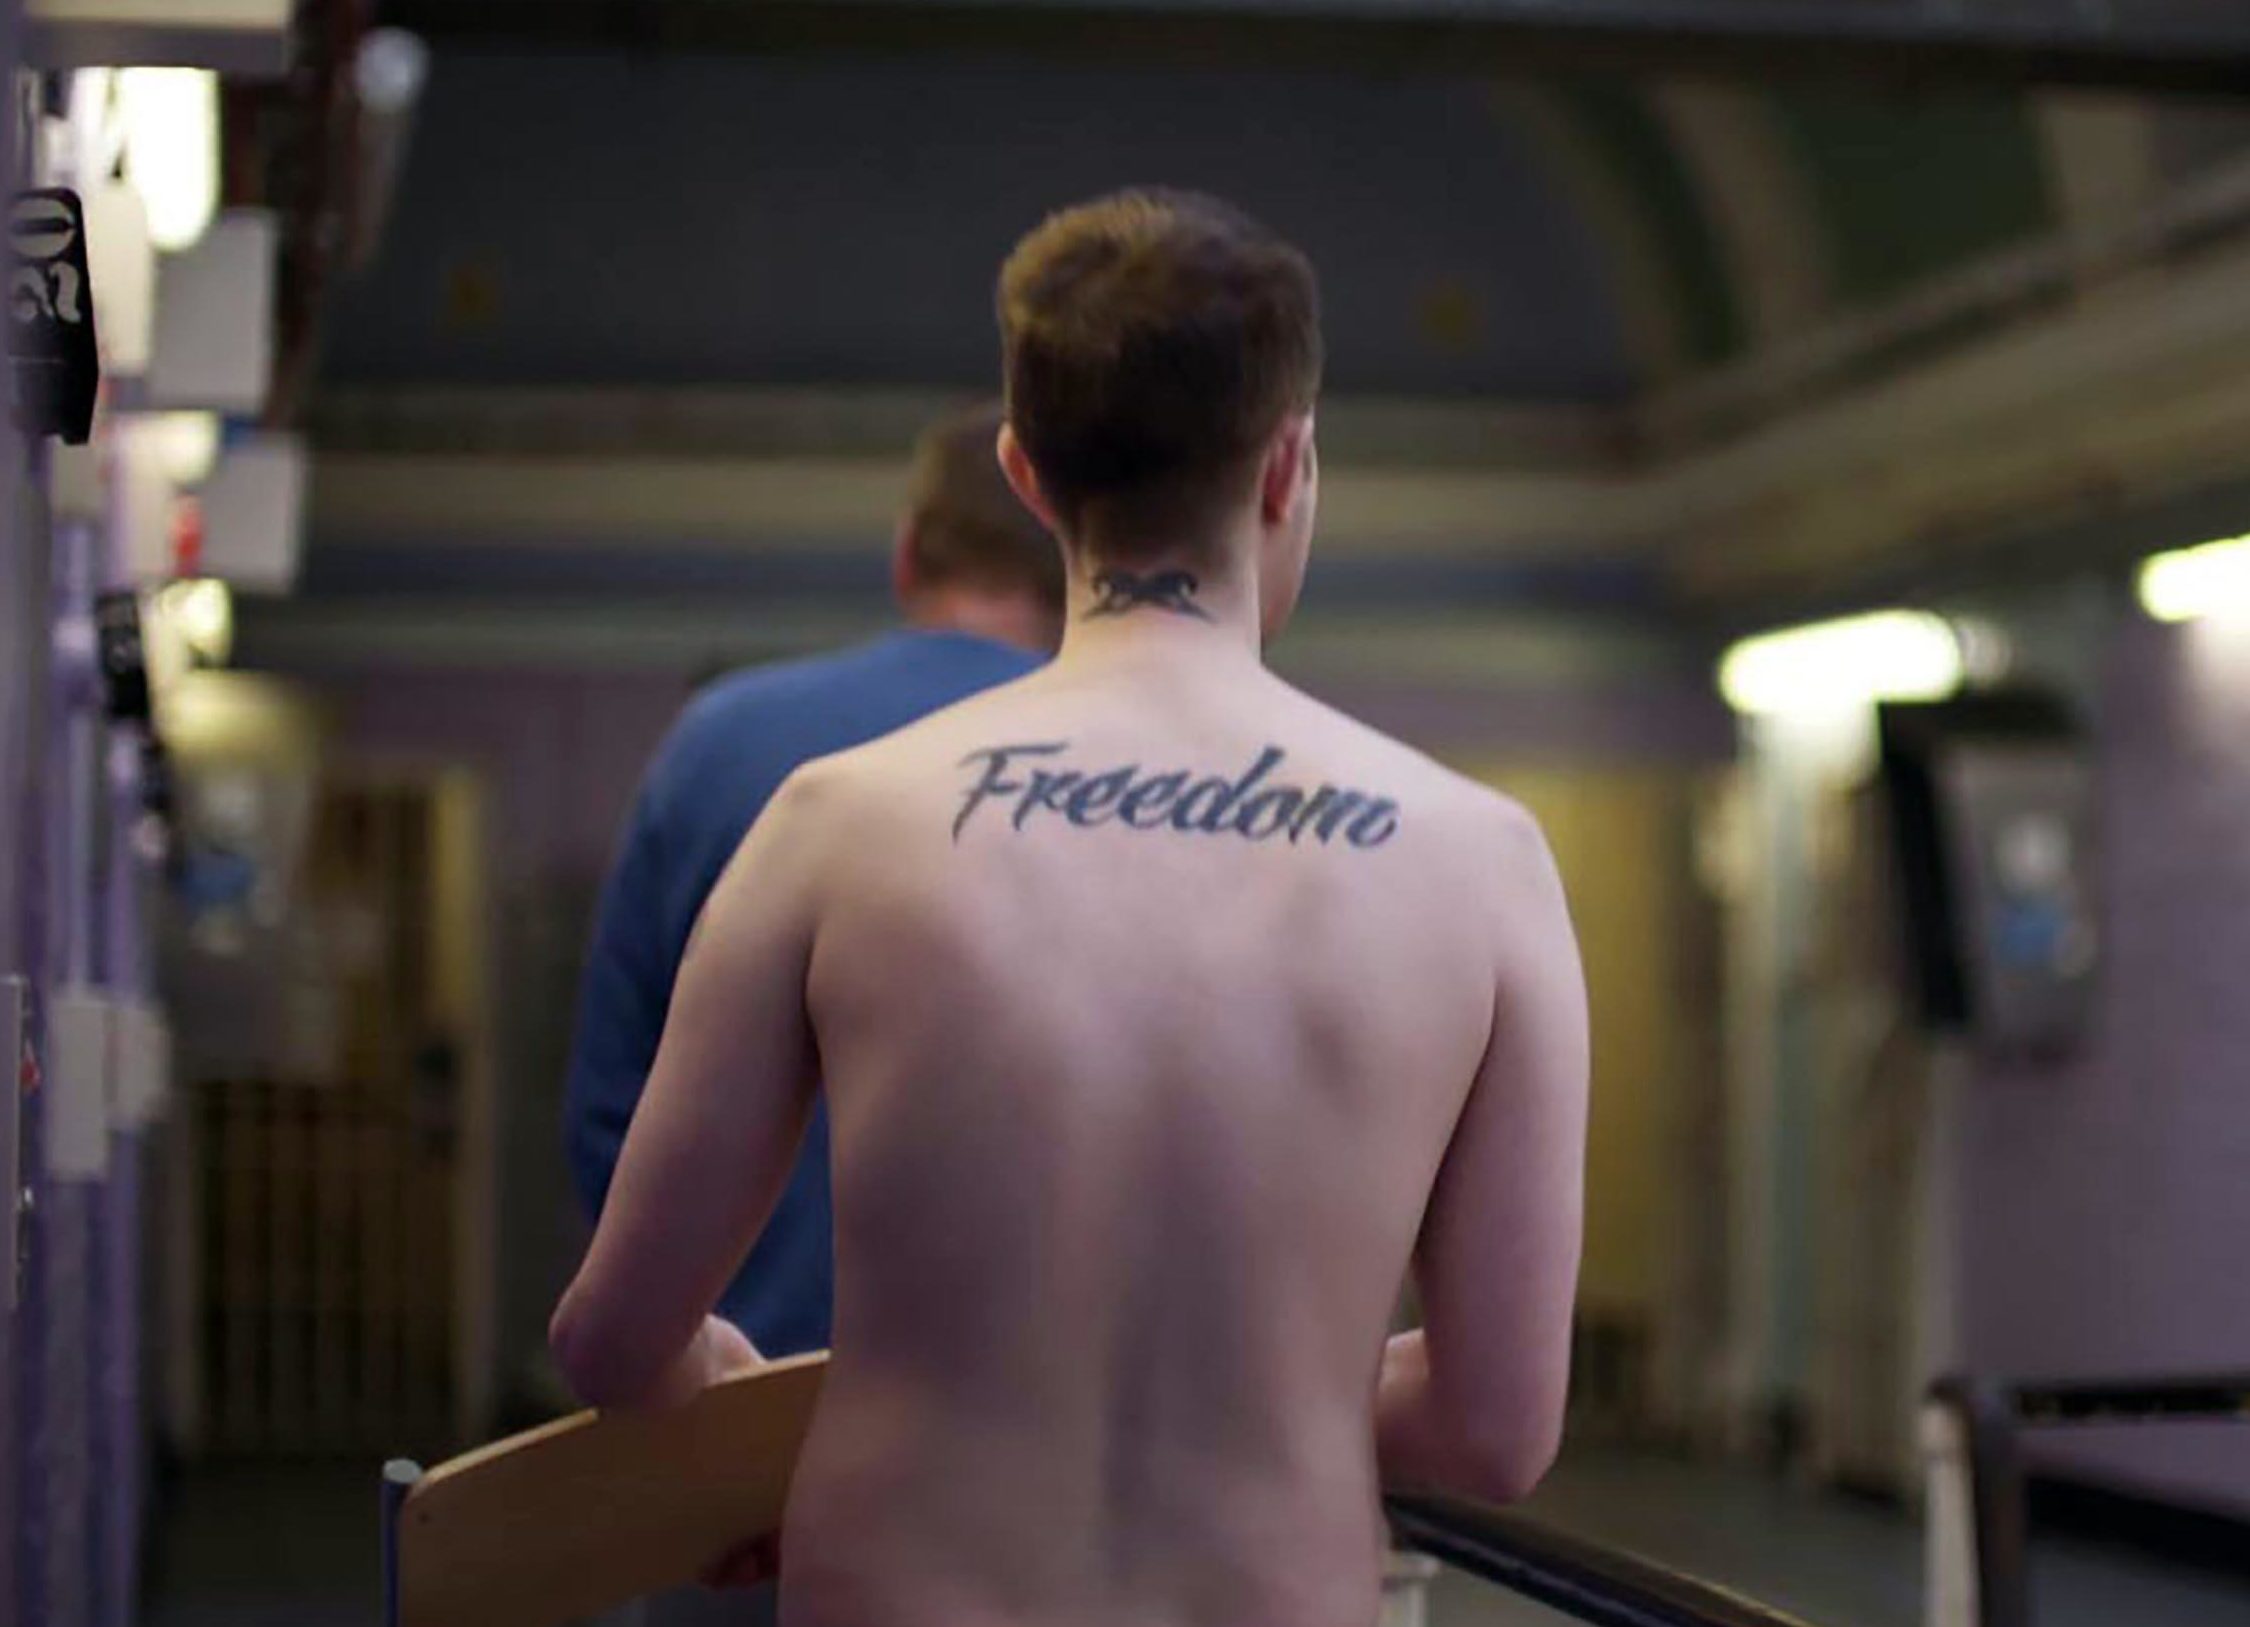 Prisoner with "Freedom" tattoo.